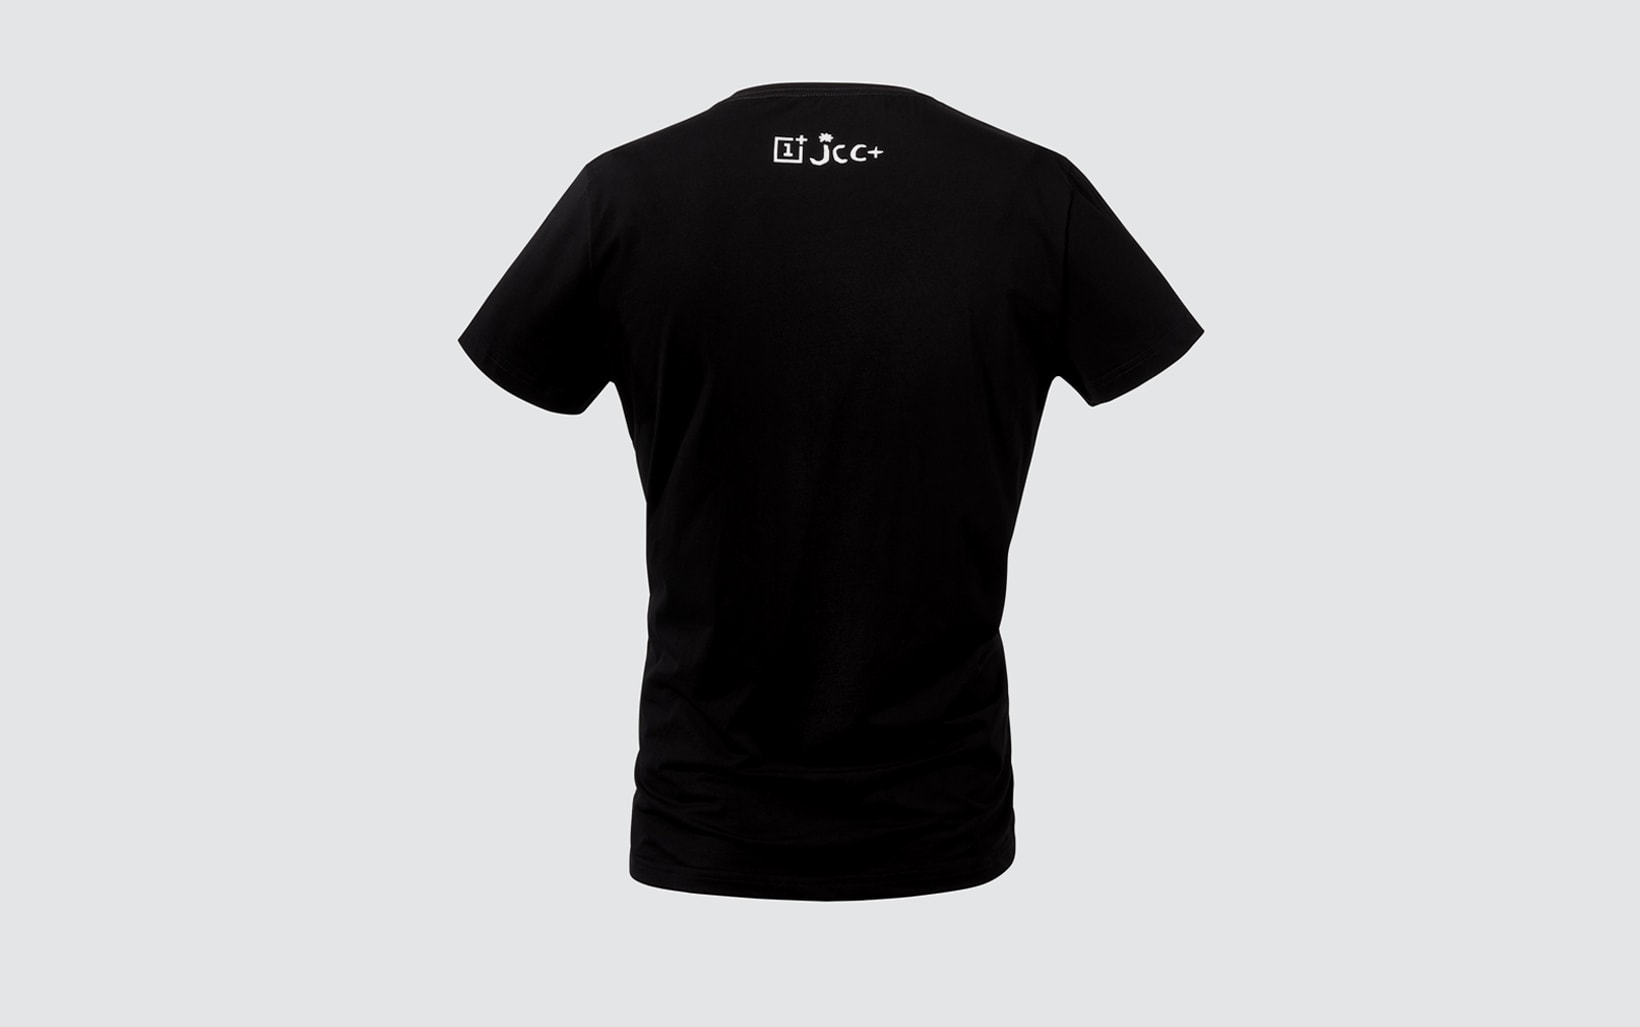 OnePlus Jean Charles de Castelbajac Callection Never Settle black t-shirt back